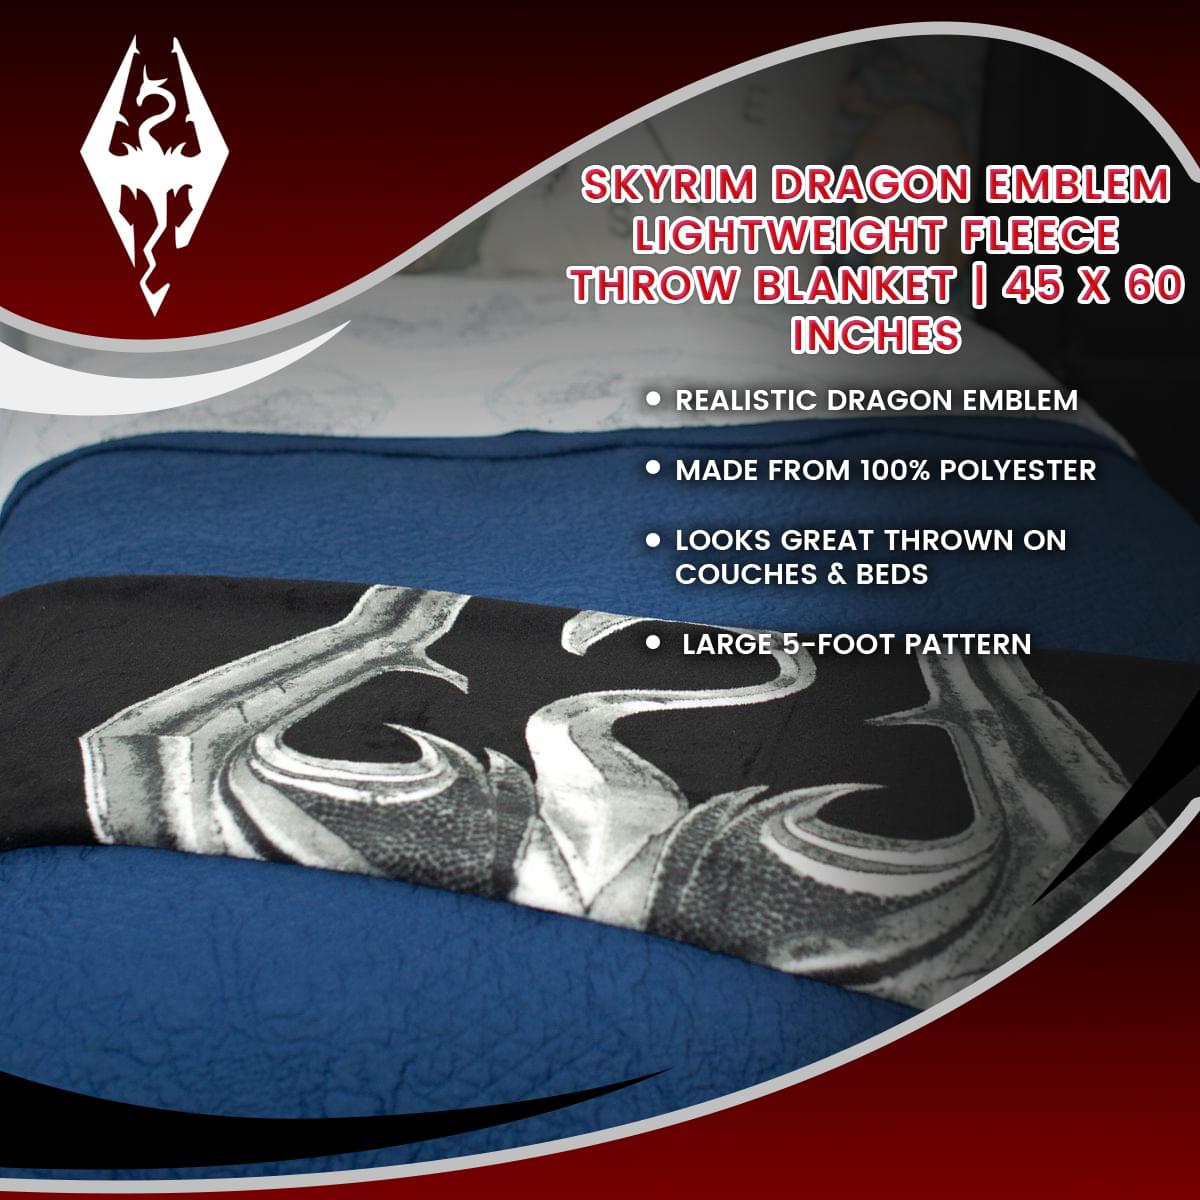 Skyrim Dragon Emblem Lightweight Fleece Throw Blanket | 45 x 60 Inches